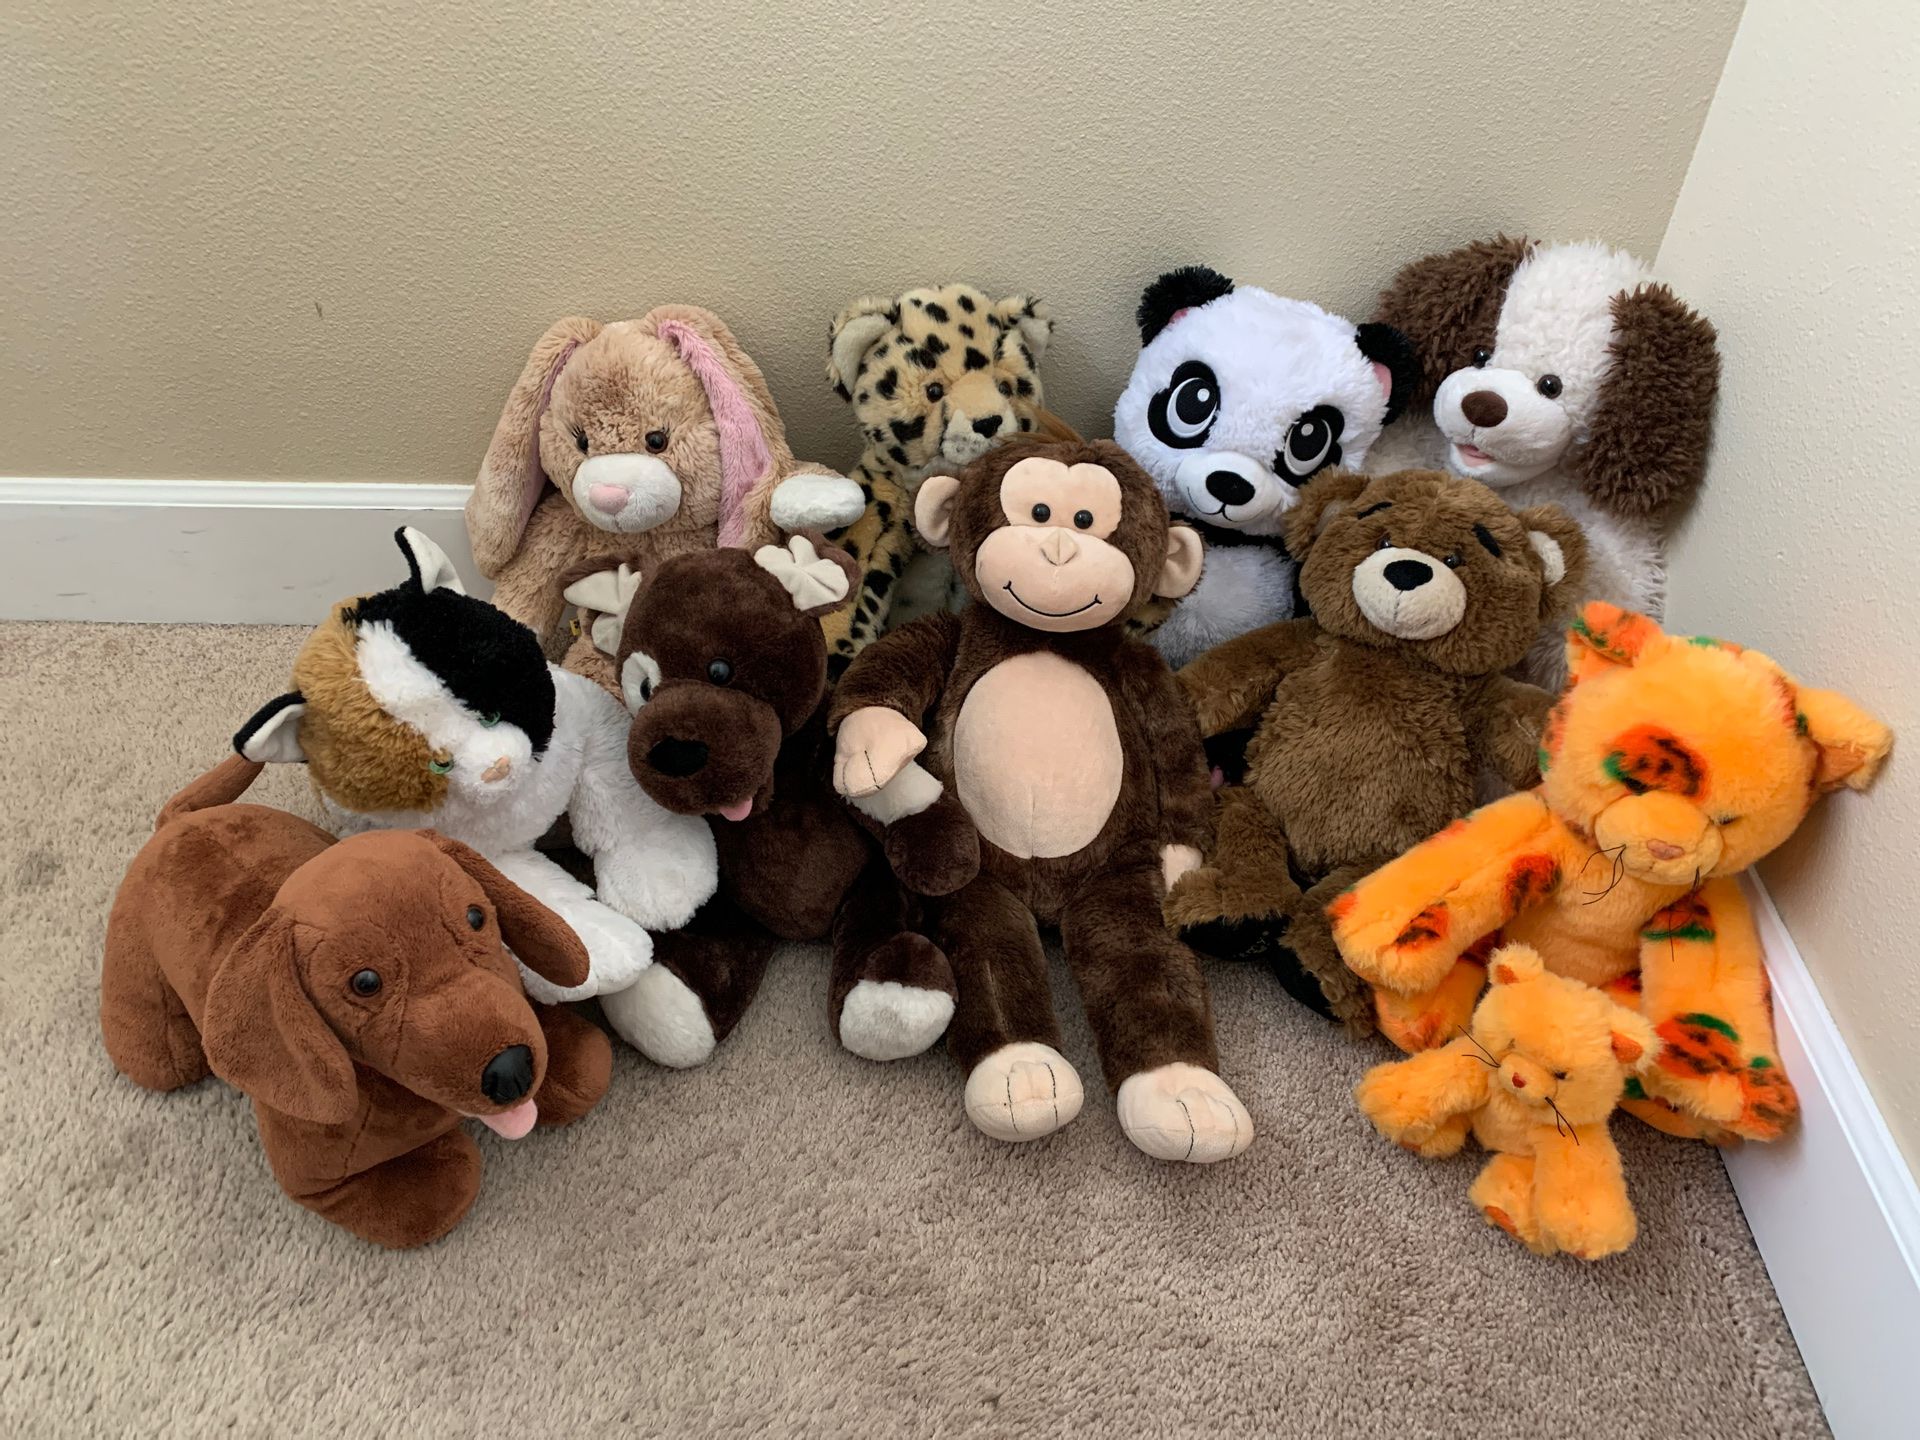 Lot of 10 Build a Bear stuffed animals